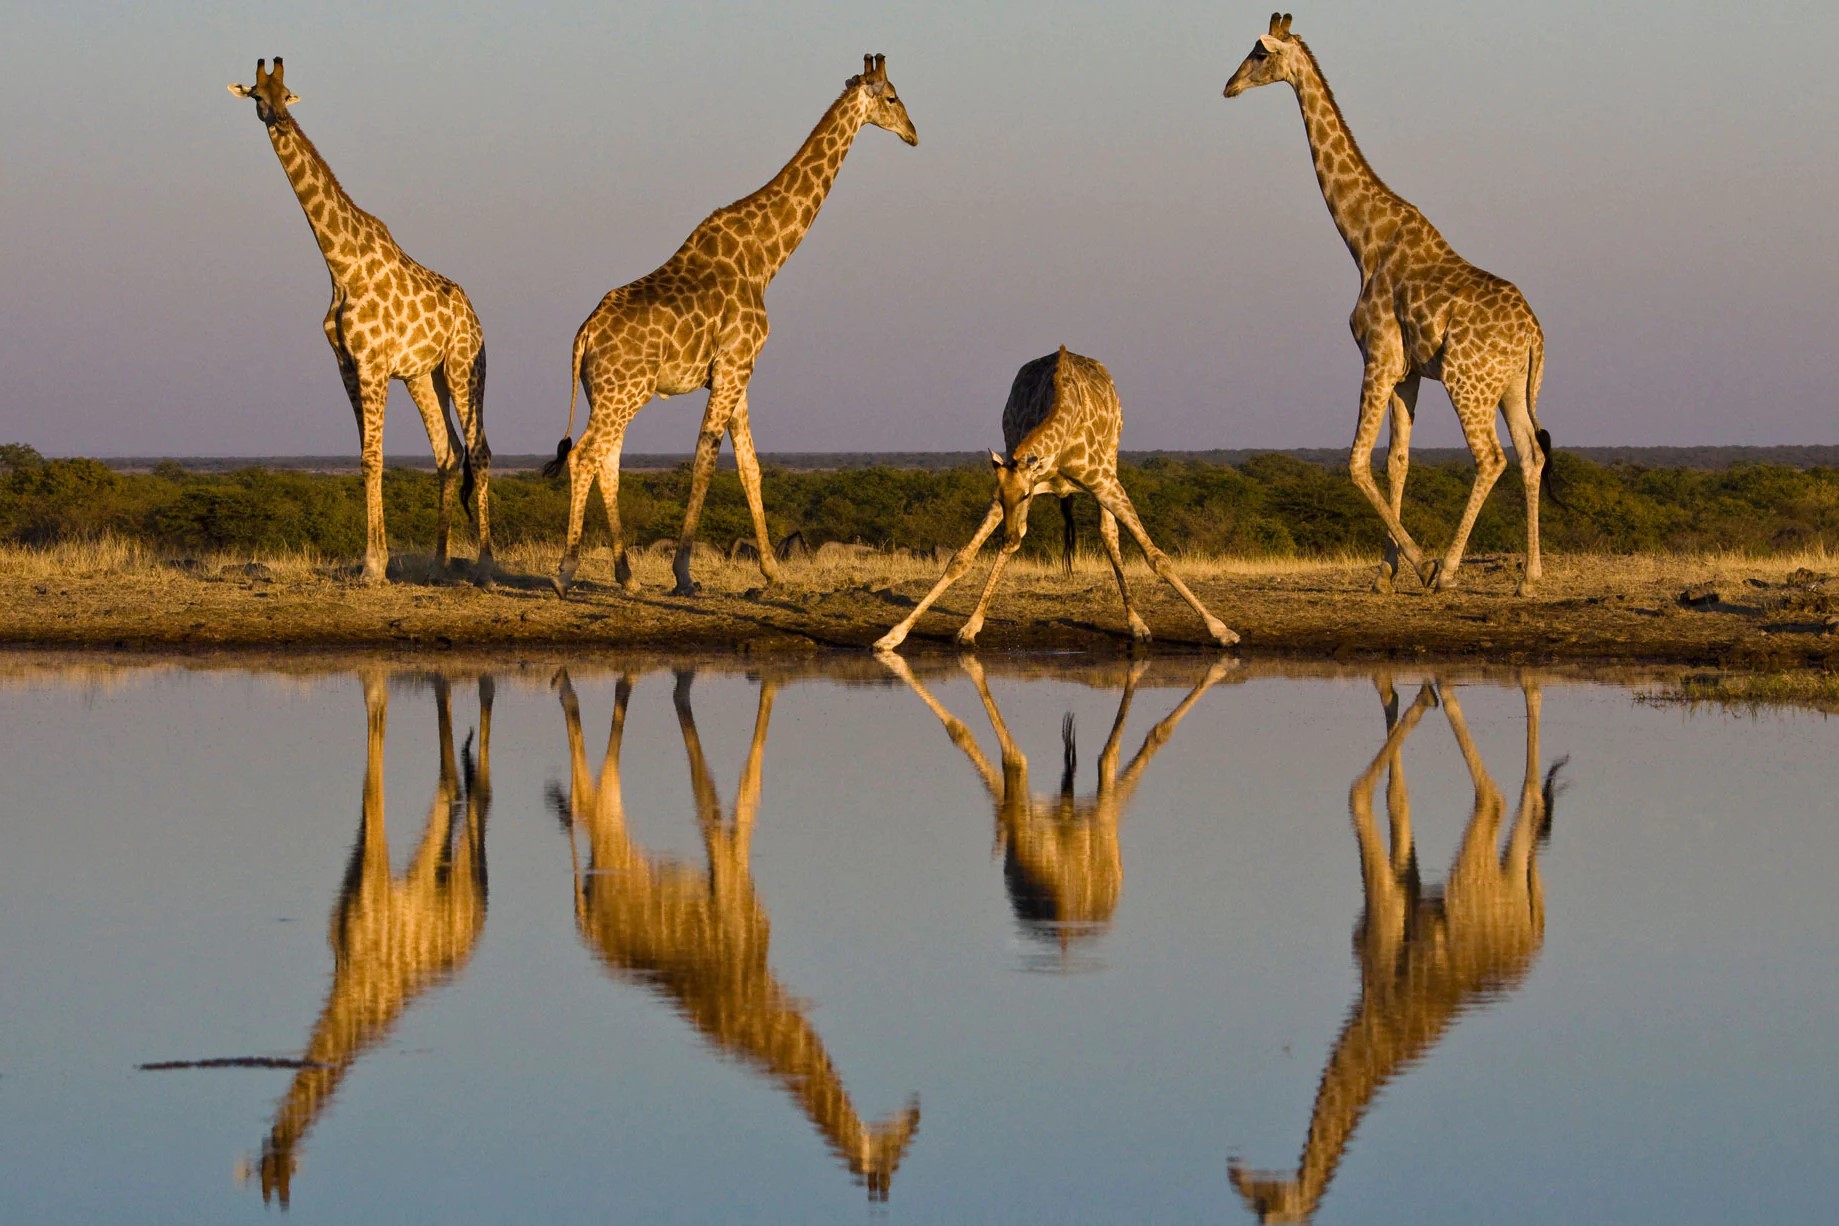 Giraffes in Africa - Facts